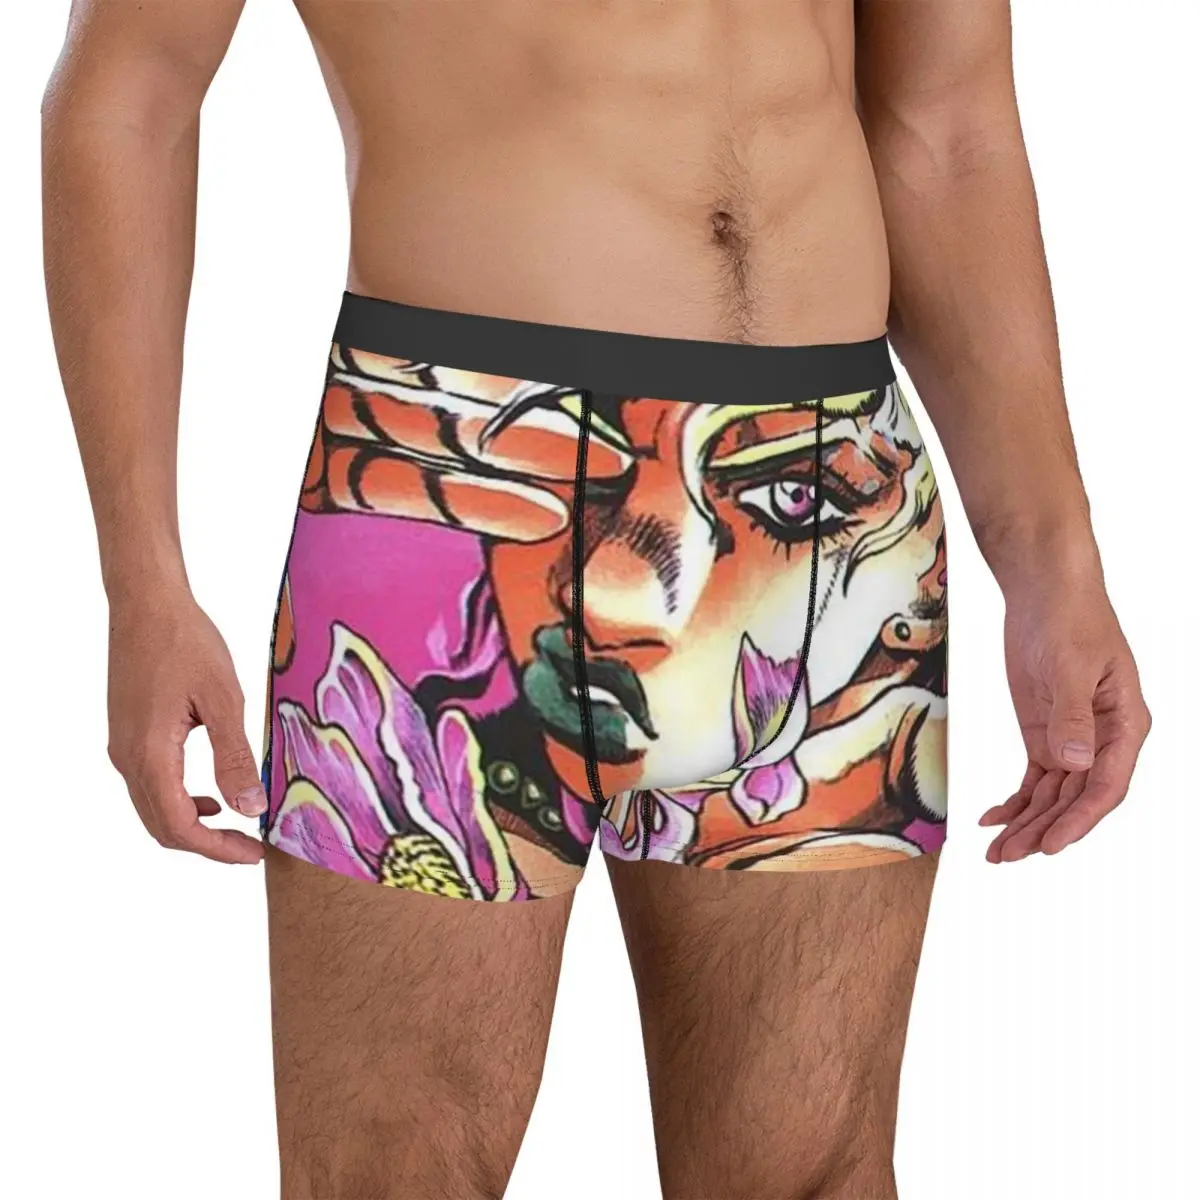 

Jojo Bizarre Adventure Underwear Giorno Giovanna Printing Boxershorts Trenky Male Underpants Cute Shorts Briefs Gift